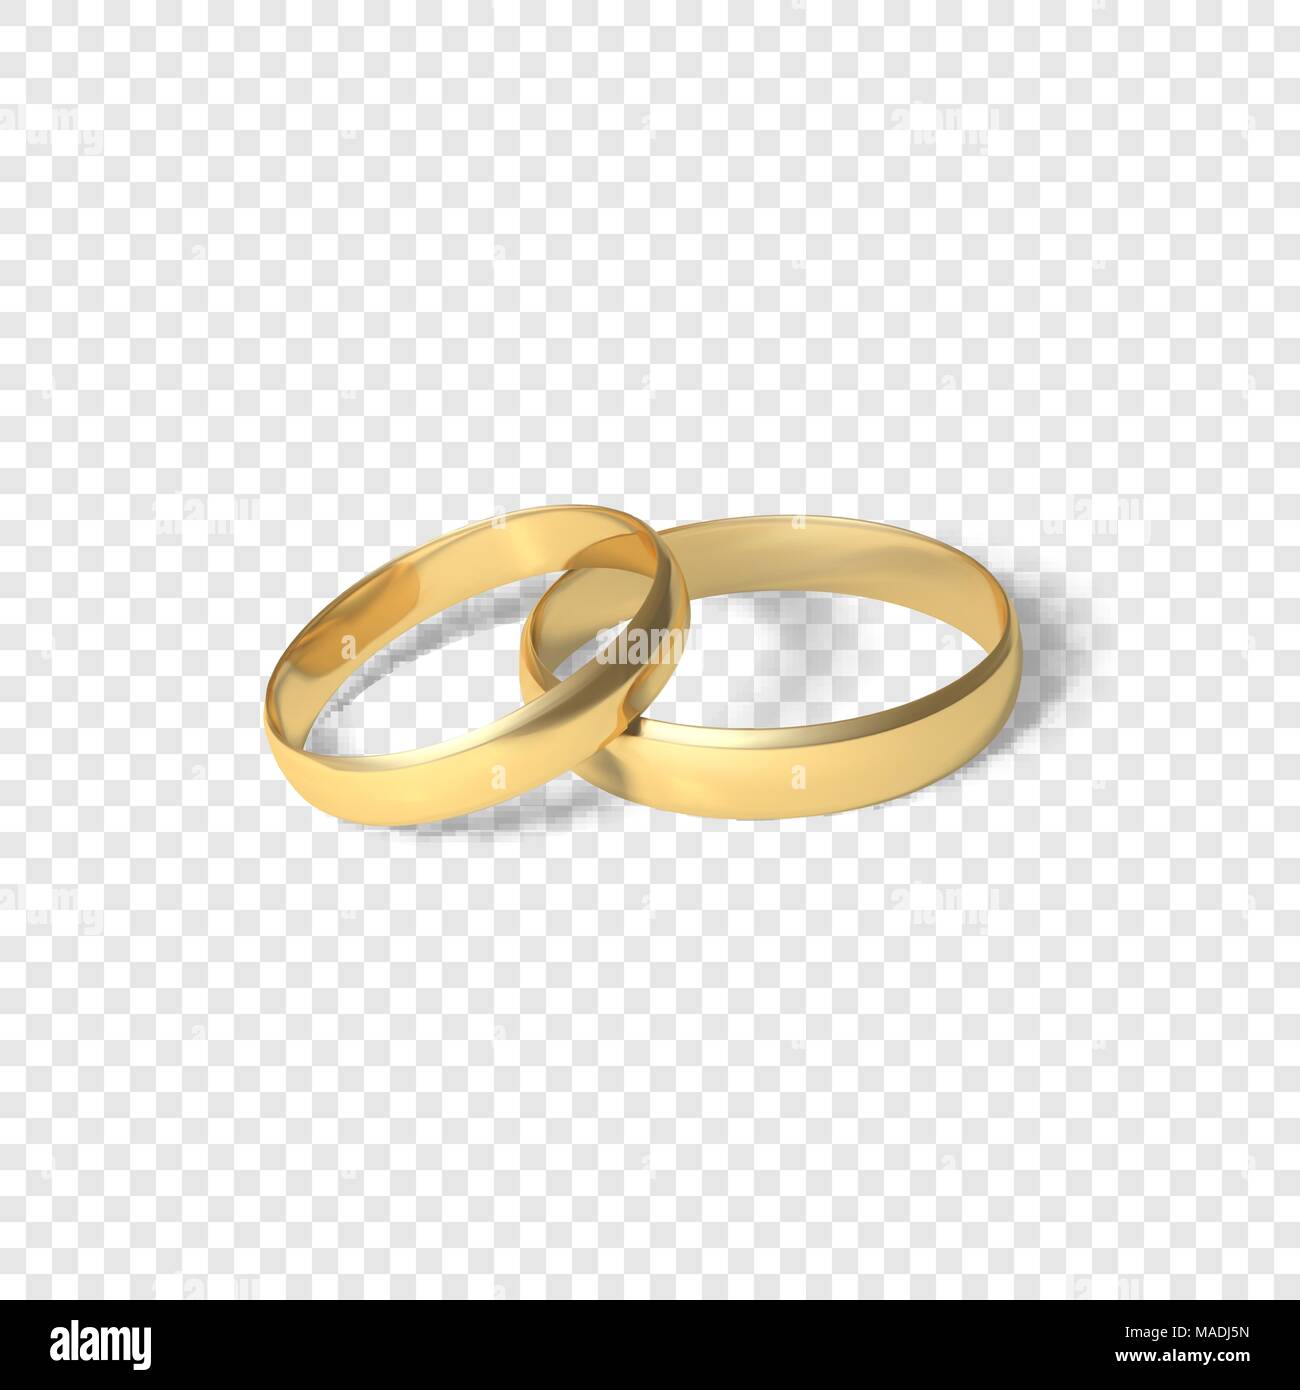 Symbol Der Ehe Paar Goldene Ringe Zwei Goldene Ringe Vector Illustration Isoliert Auf Transparentem Hintergrund Stock Vektorgrafik Alamy